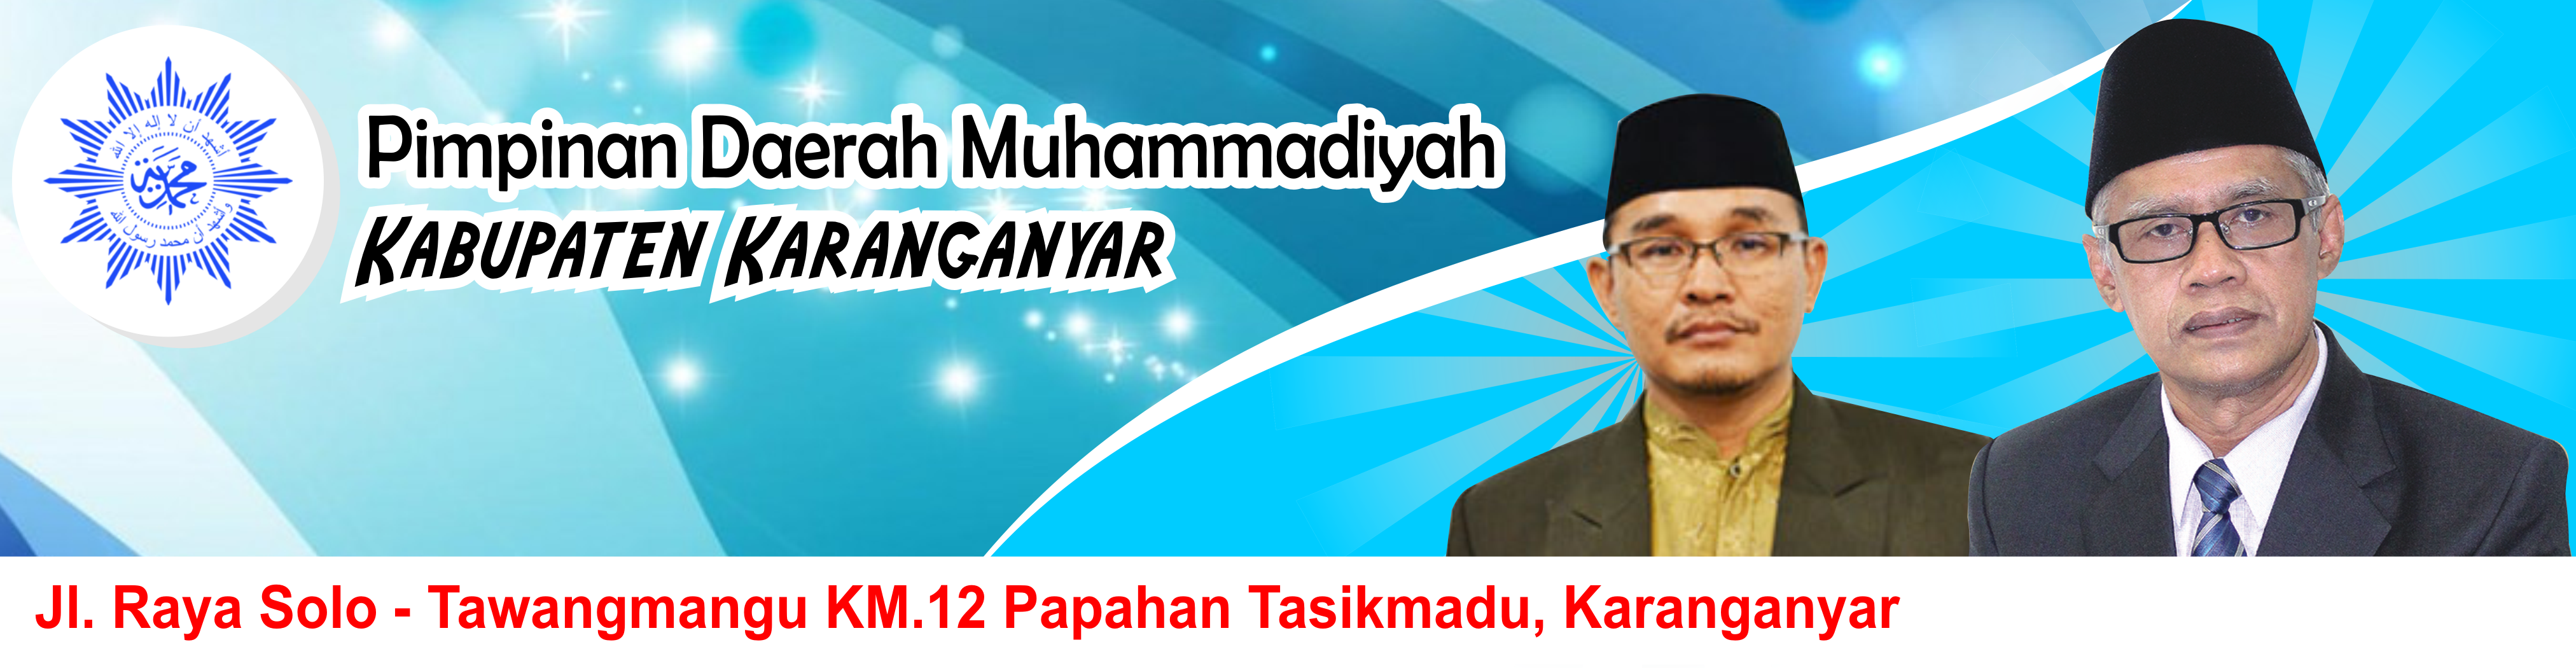 Lembaga Penelitian dan Pengembangan Pimpinan Daerah Muhammadiyah Kabupaten Karanganyar